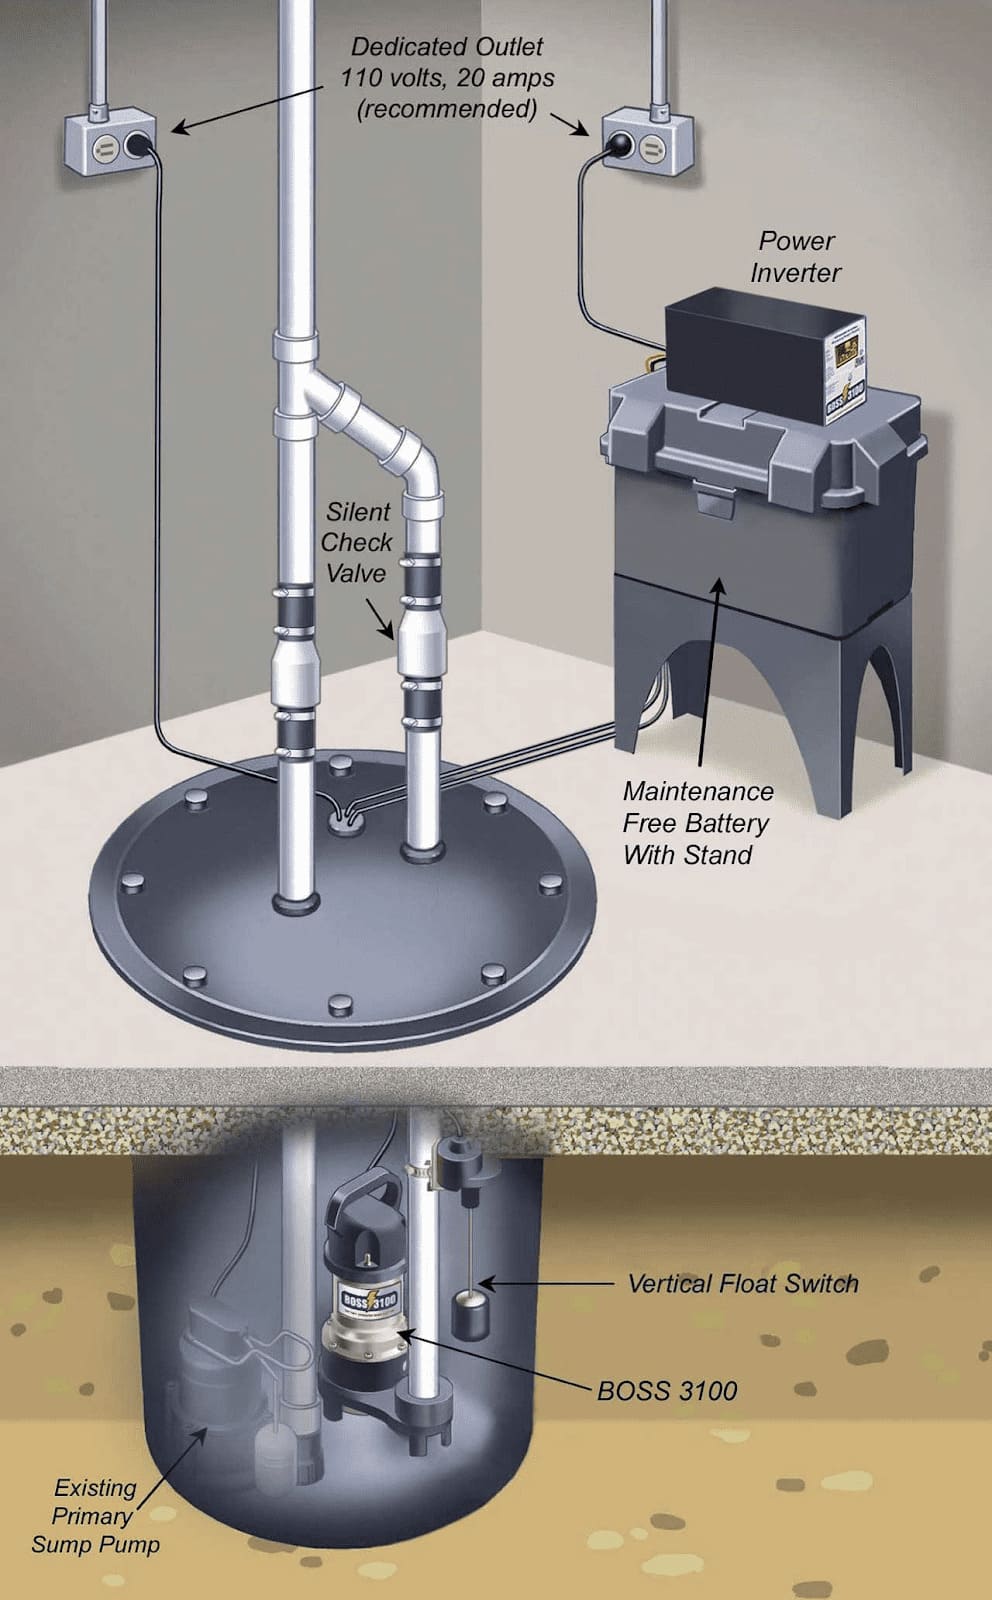 4. Types Of Sump Pumps- Pedestal Sump Pumps, Submersible Sump Pumps,Battery-Powered Sump Pumps, Combination Sump Pumps